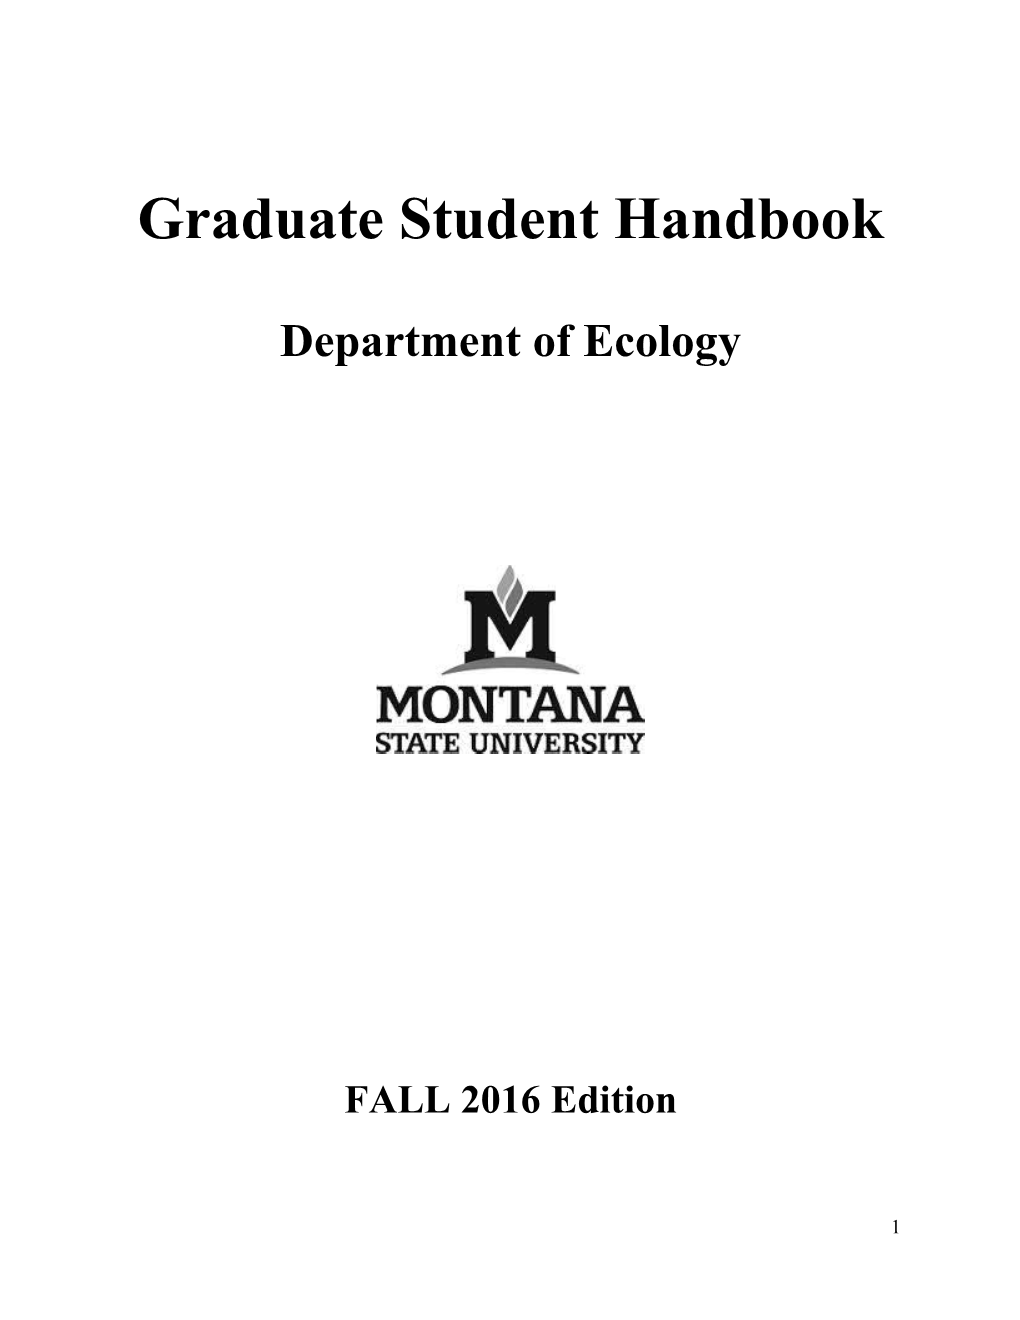 Graduate Student Handbook s1